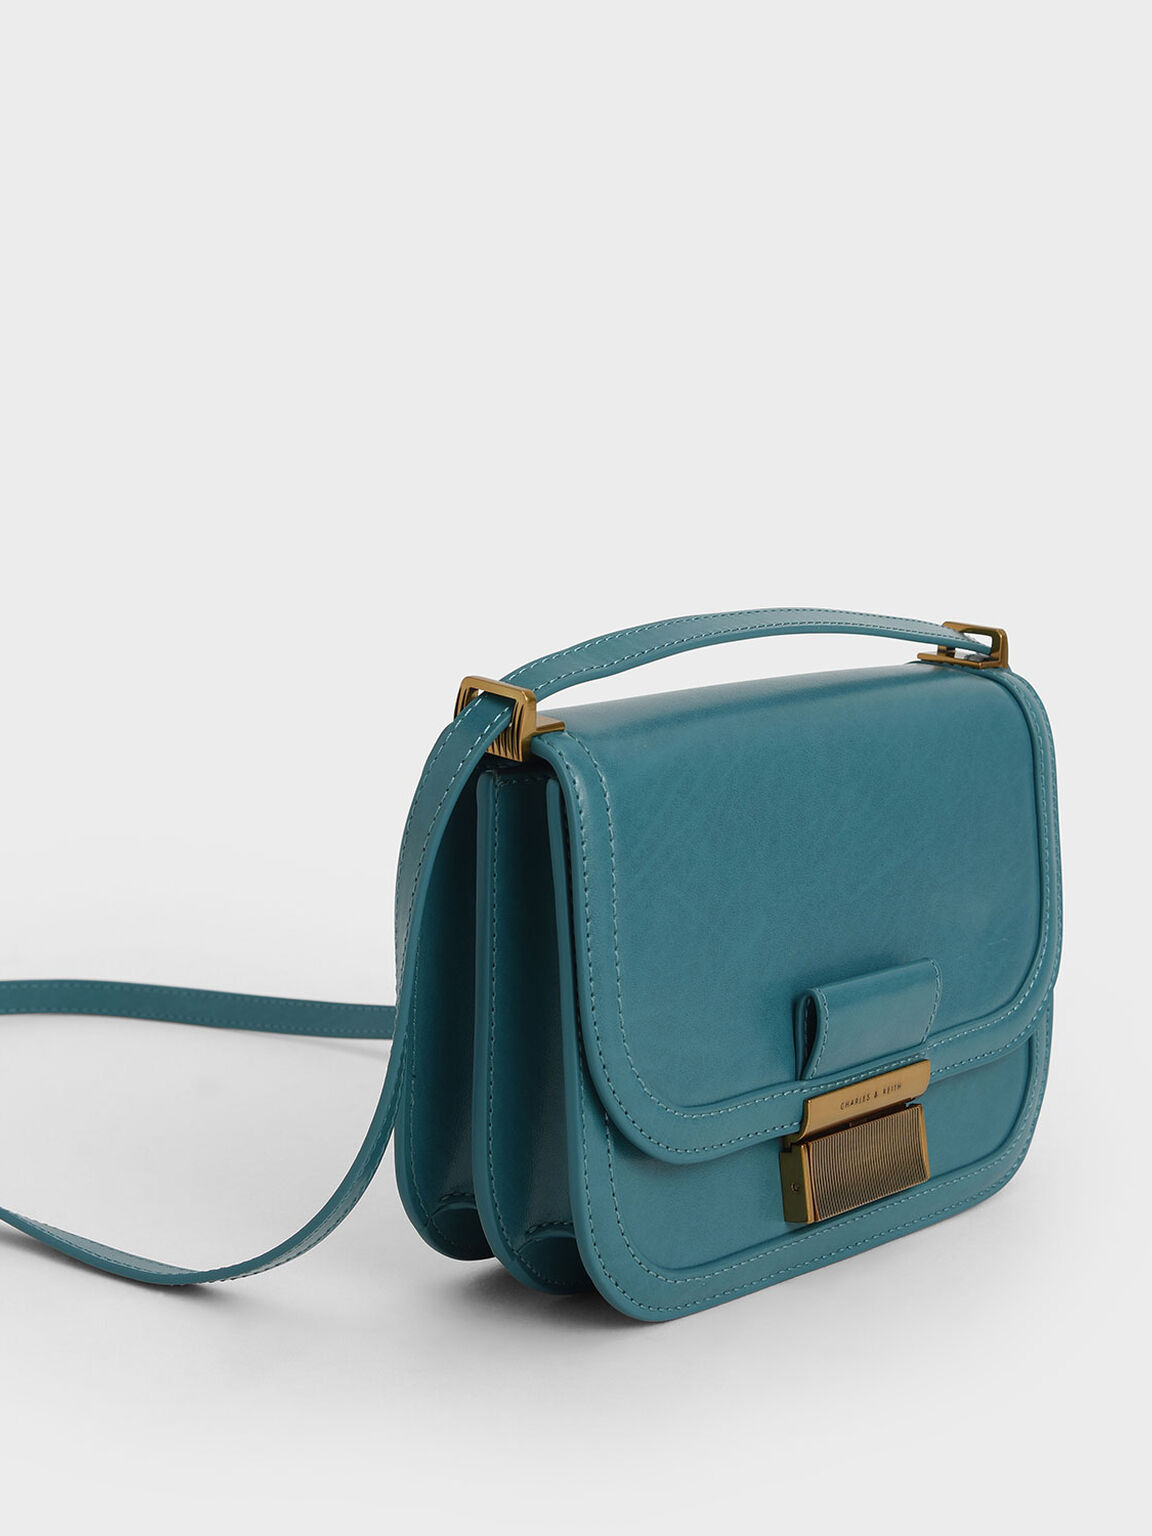 Charlot Bag, Turquoise, hi-res